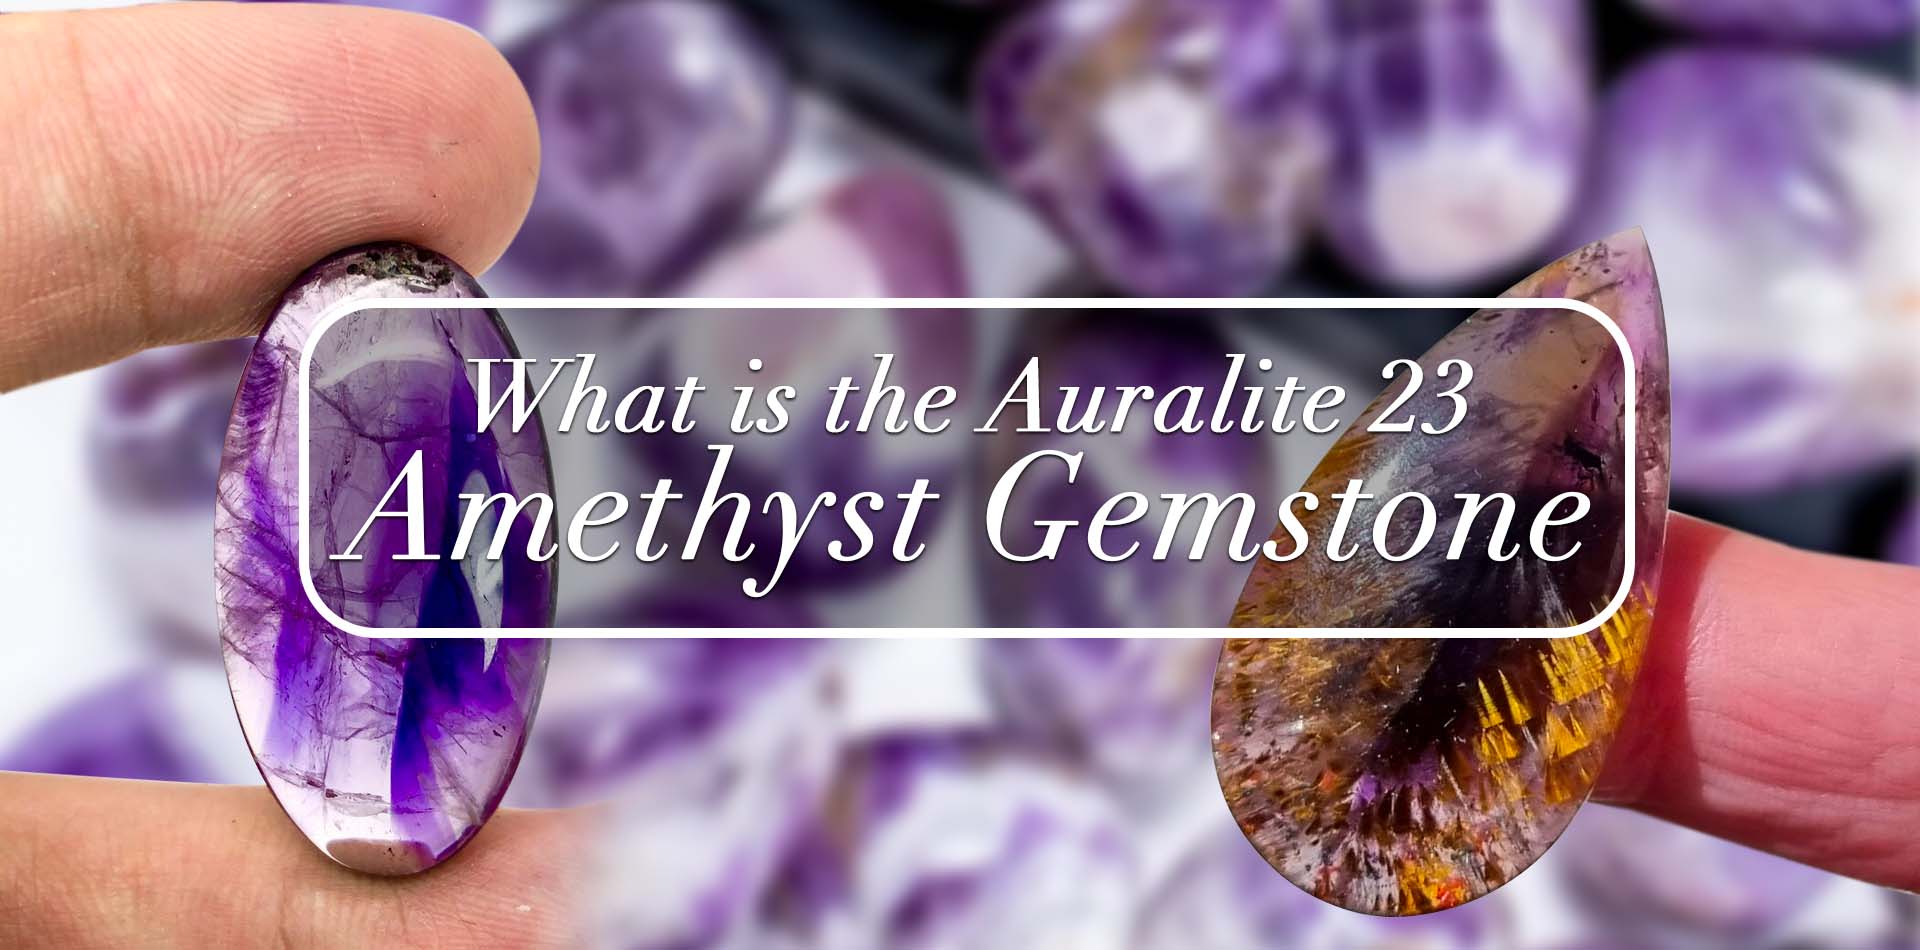 What is the Auralite 23 Amethyst Gemstone?